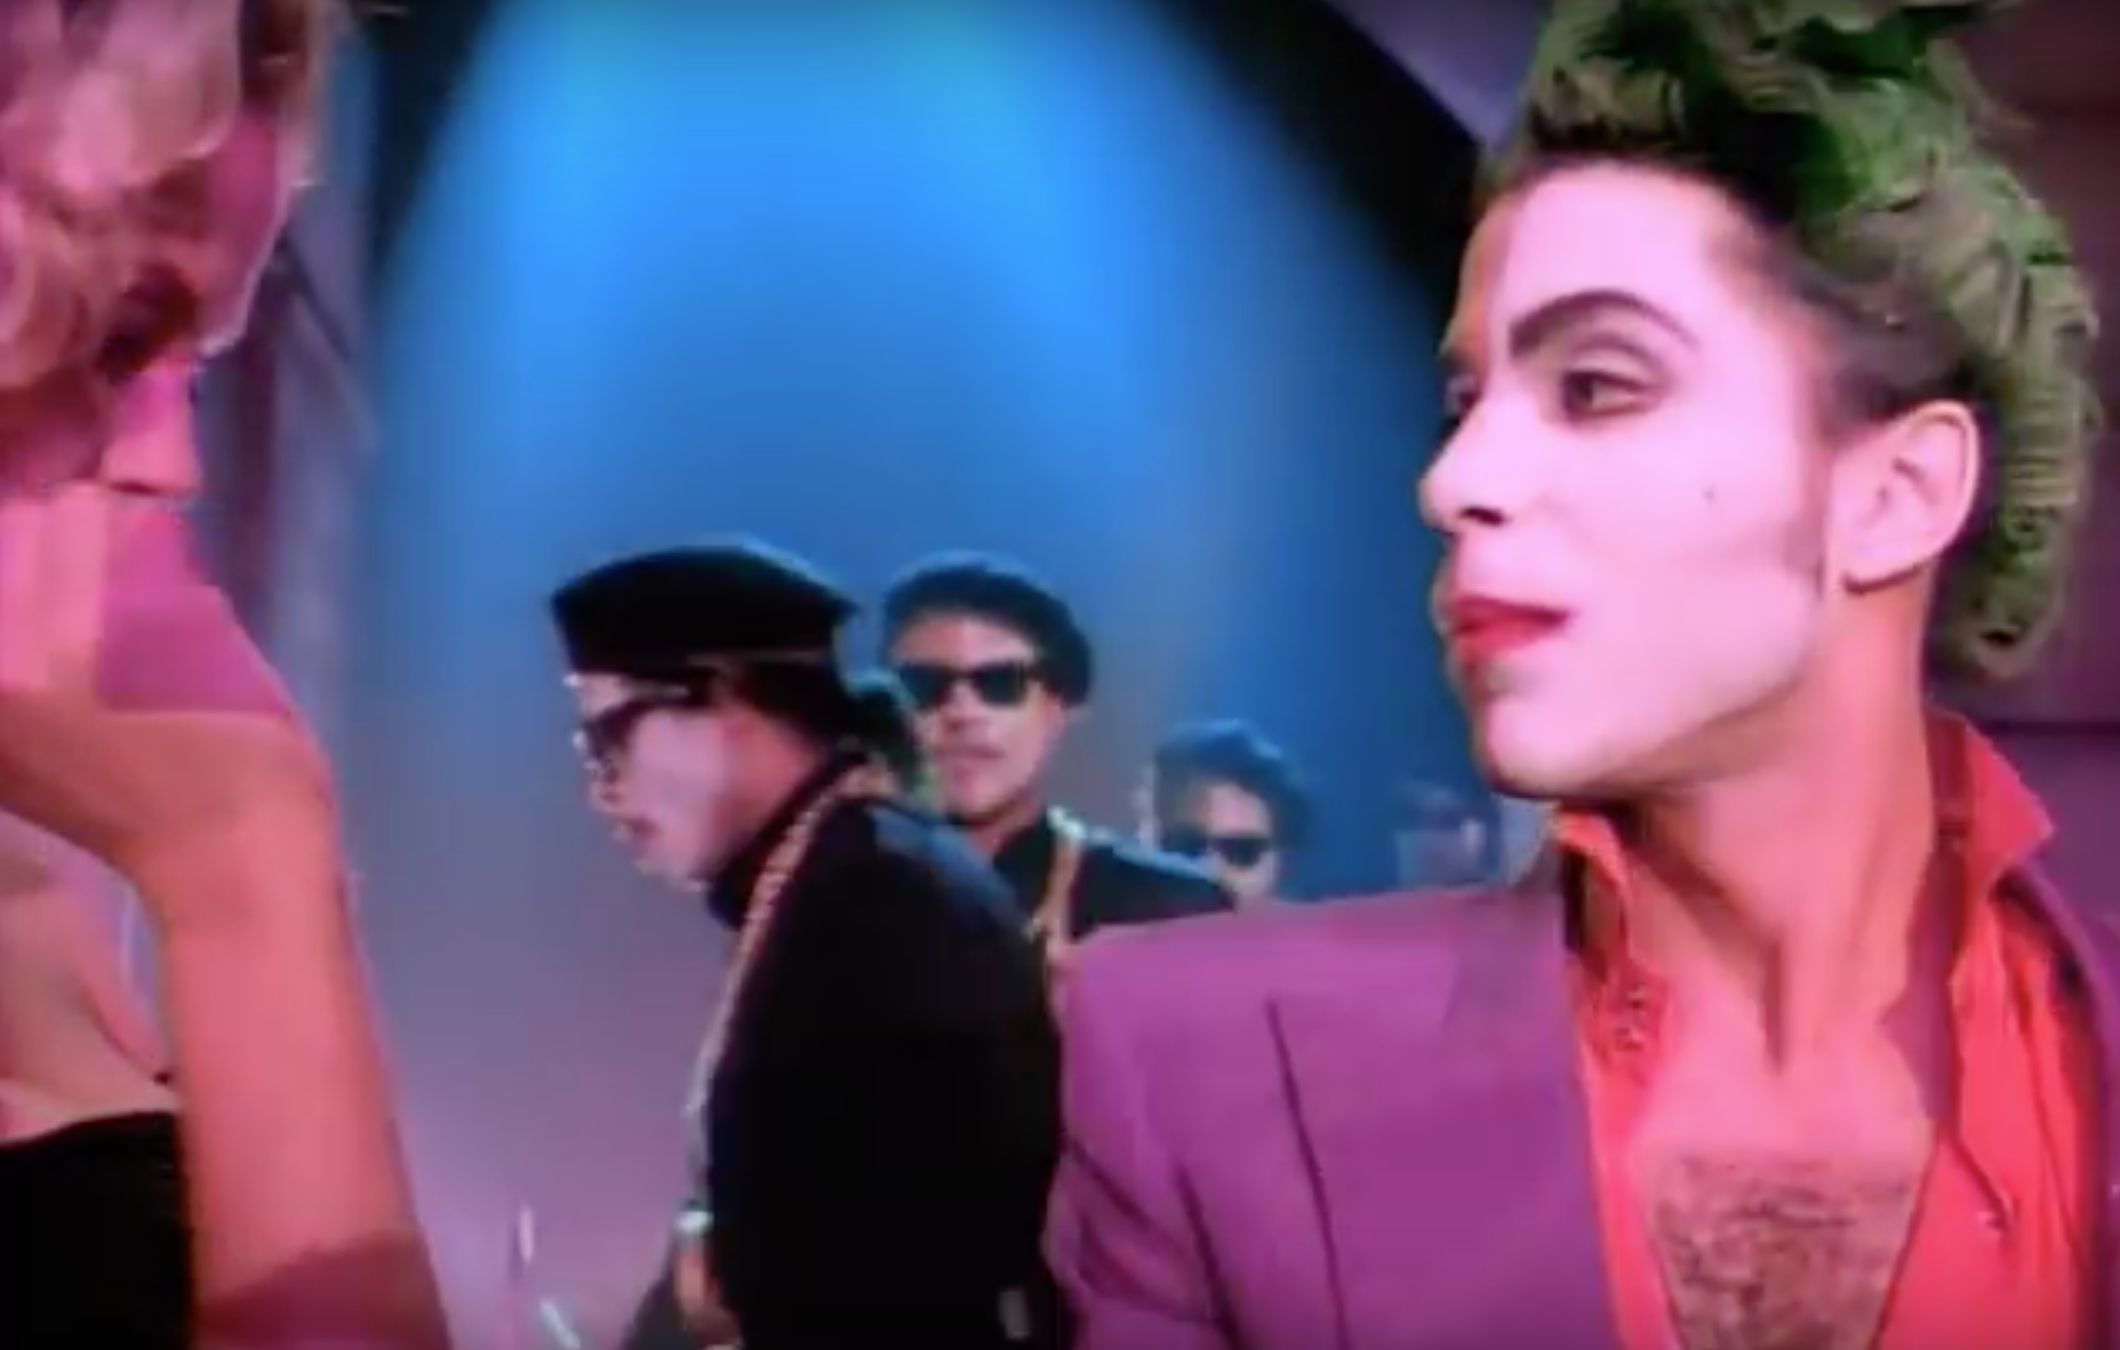 Prince (Partyman music video)